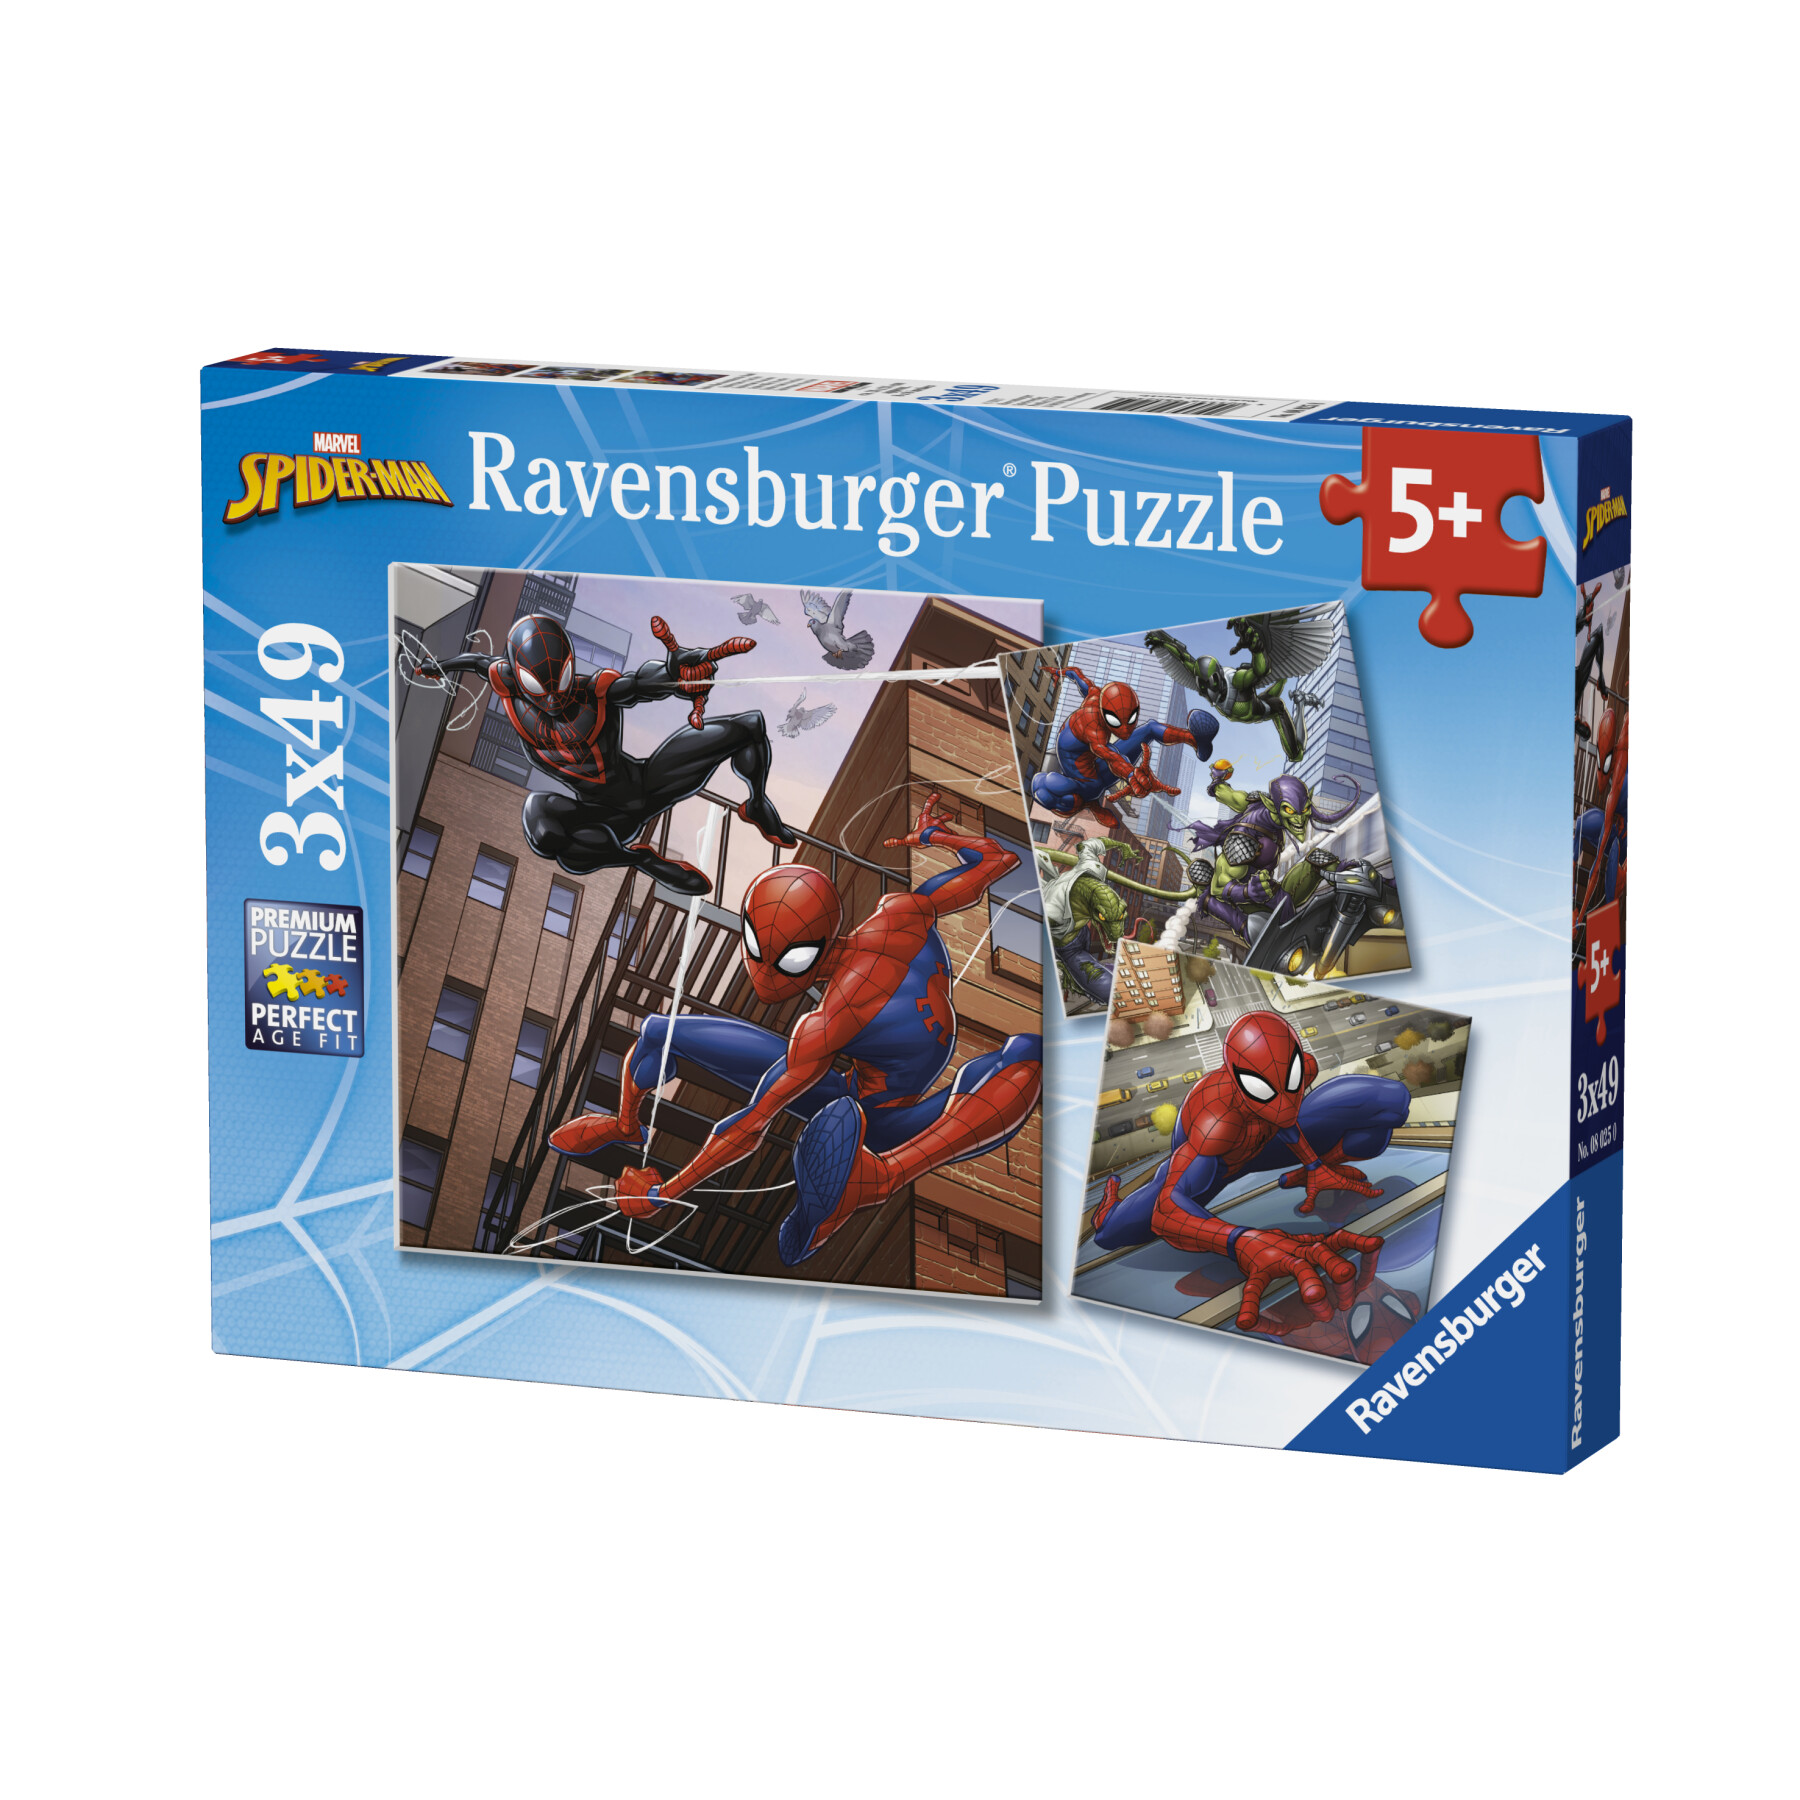 Ravensburger - puzzle spiderman, collezione 3x49, 3 puzzle da 49 pezzi, età raccomandata 5+ anni - RAVENSBURGER, Avengers, Spiderman